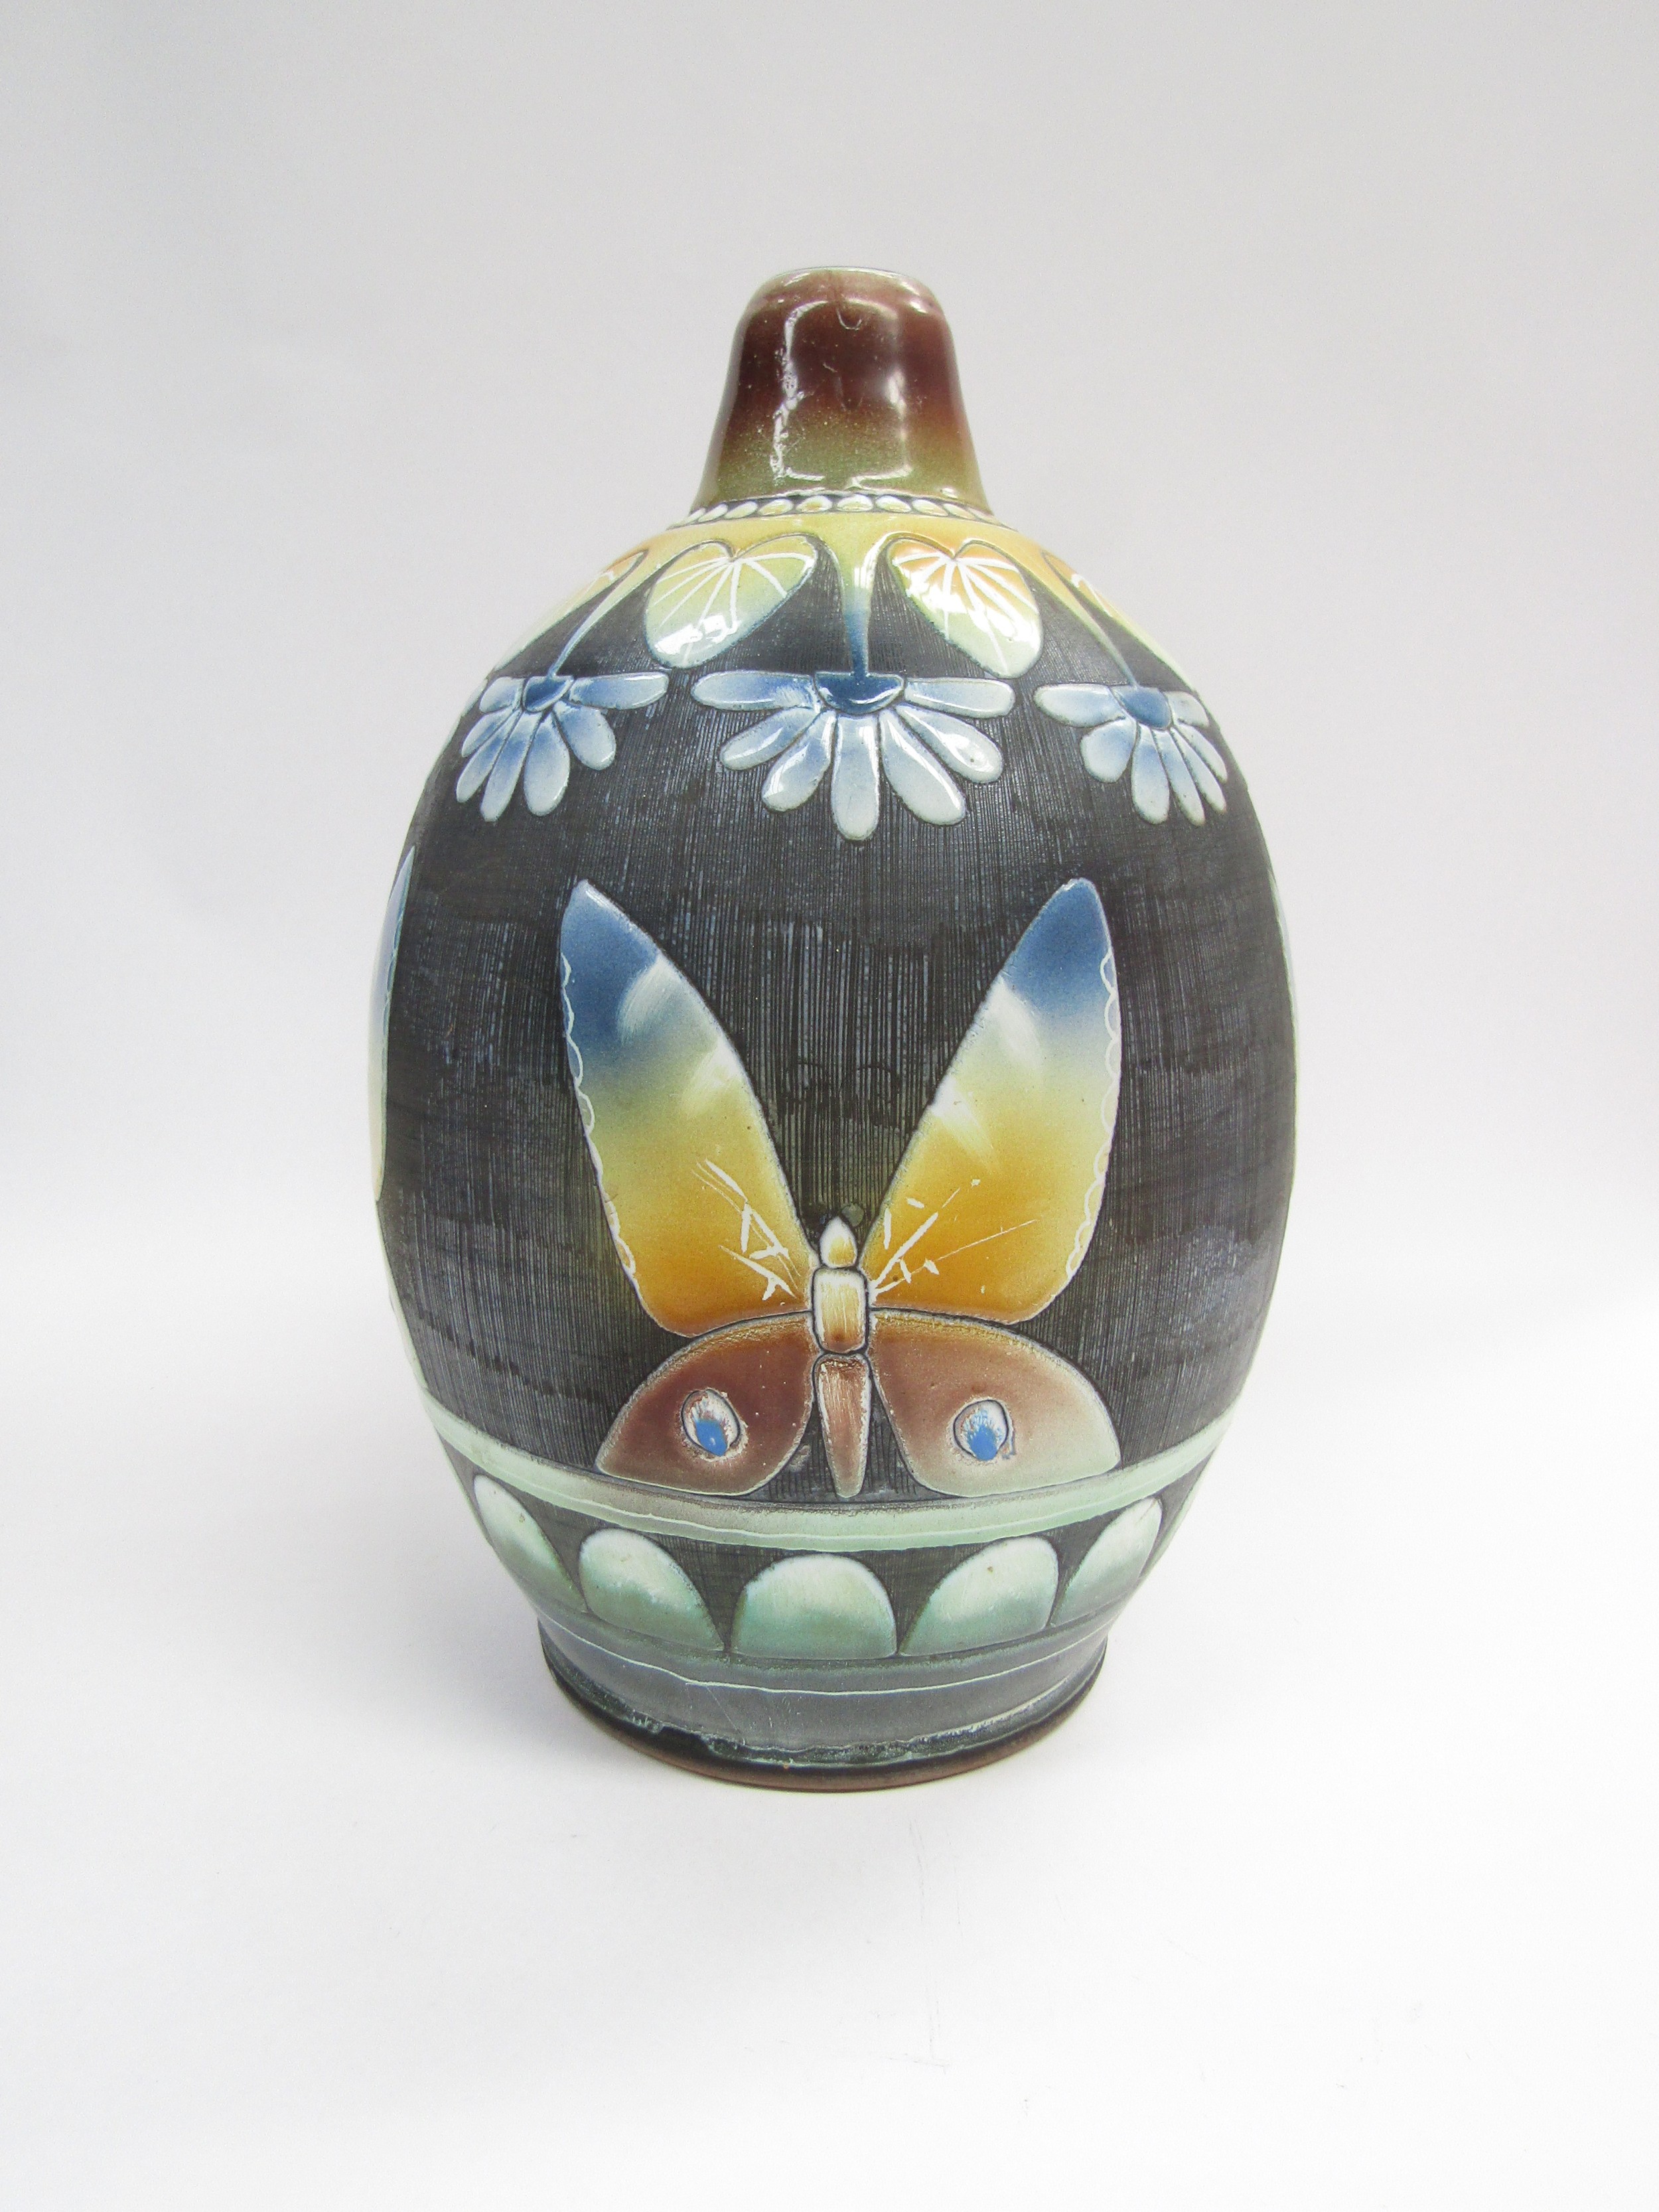 Tilgmans Keramic, Swedish 1960's studio pottery floor lamp base by Marian Zawadzki, butterfly design - Image 3 of 4